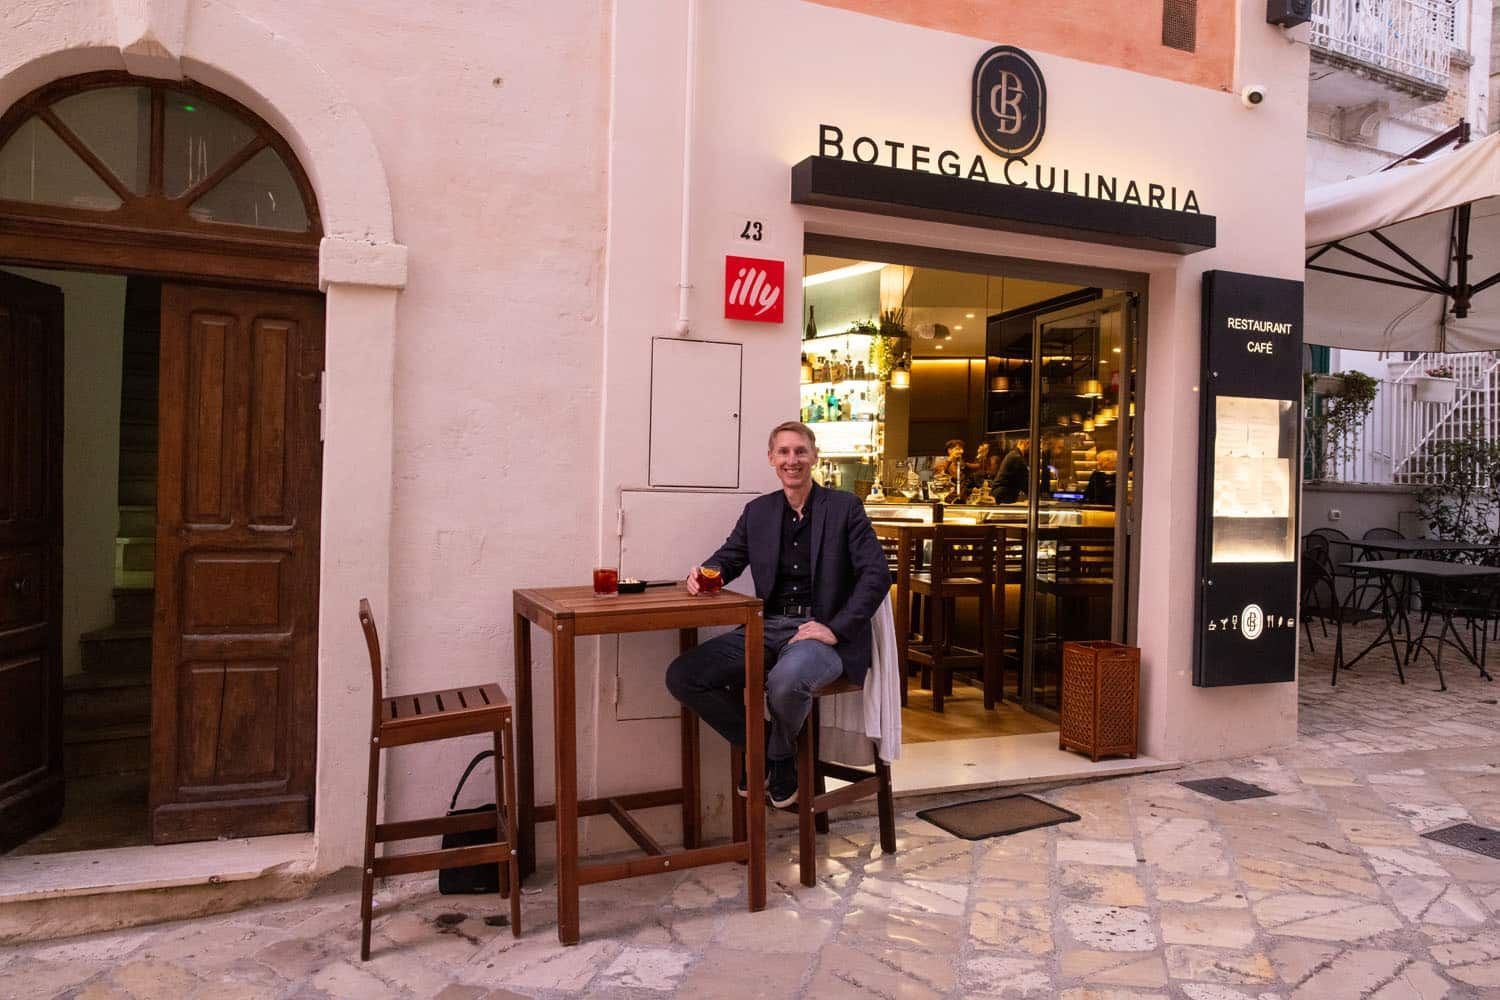 Botega Culinaria | Where to eat in Matera